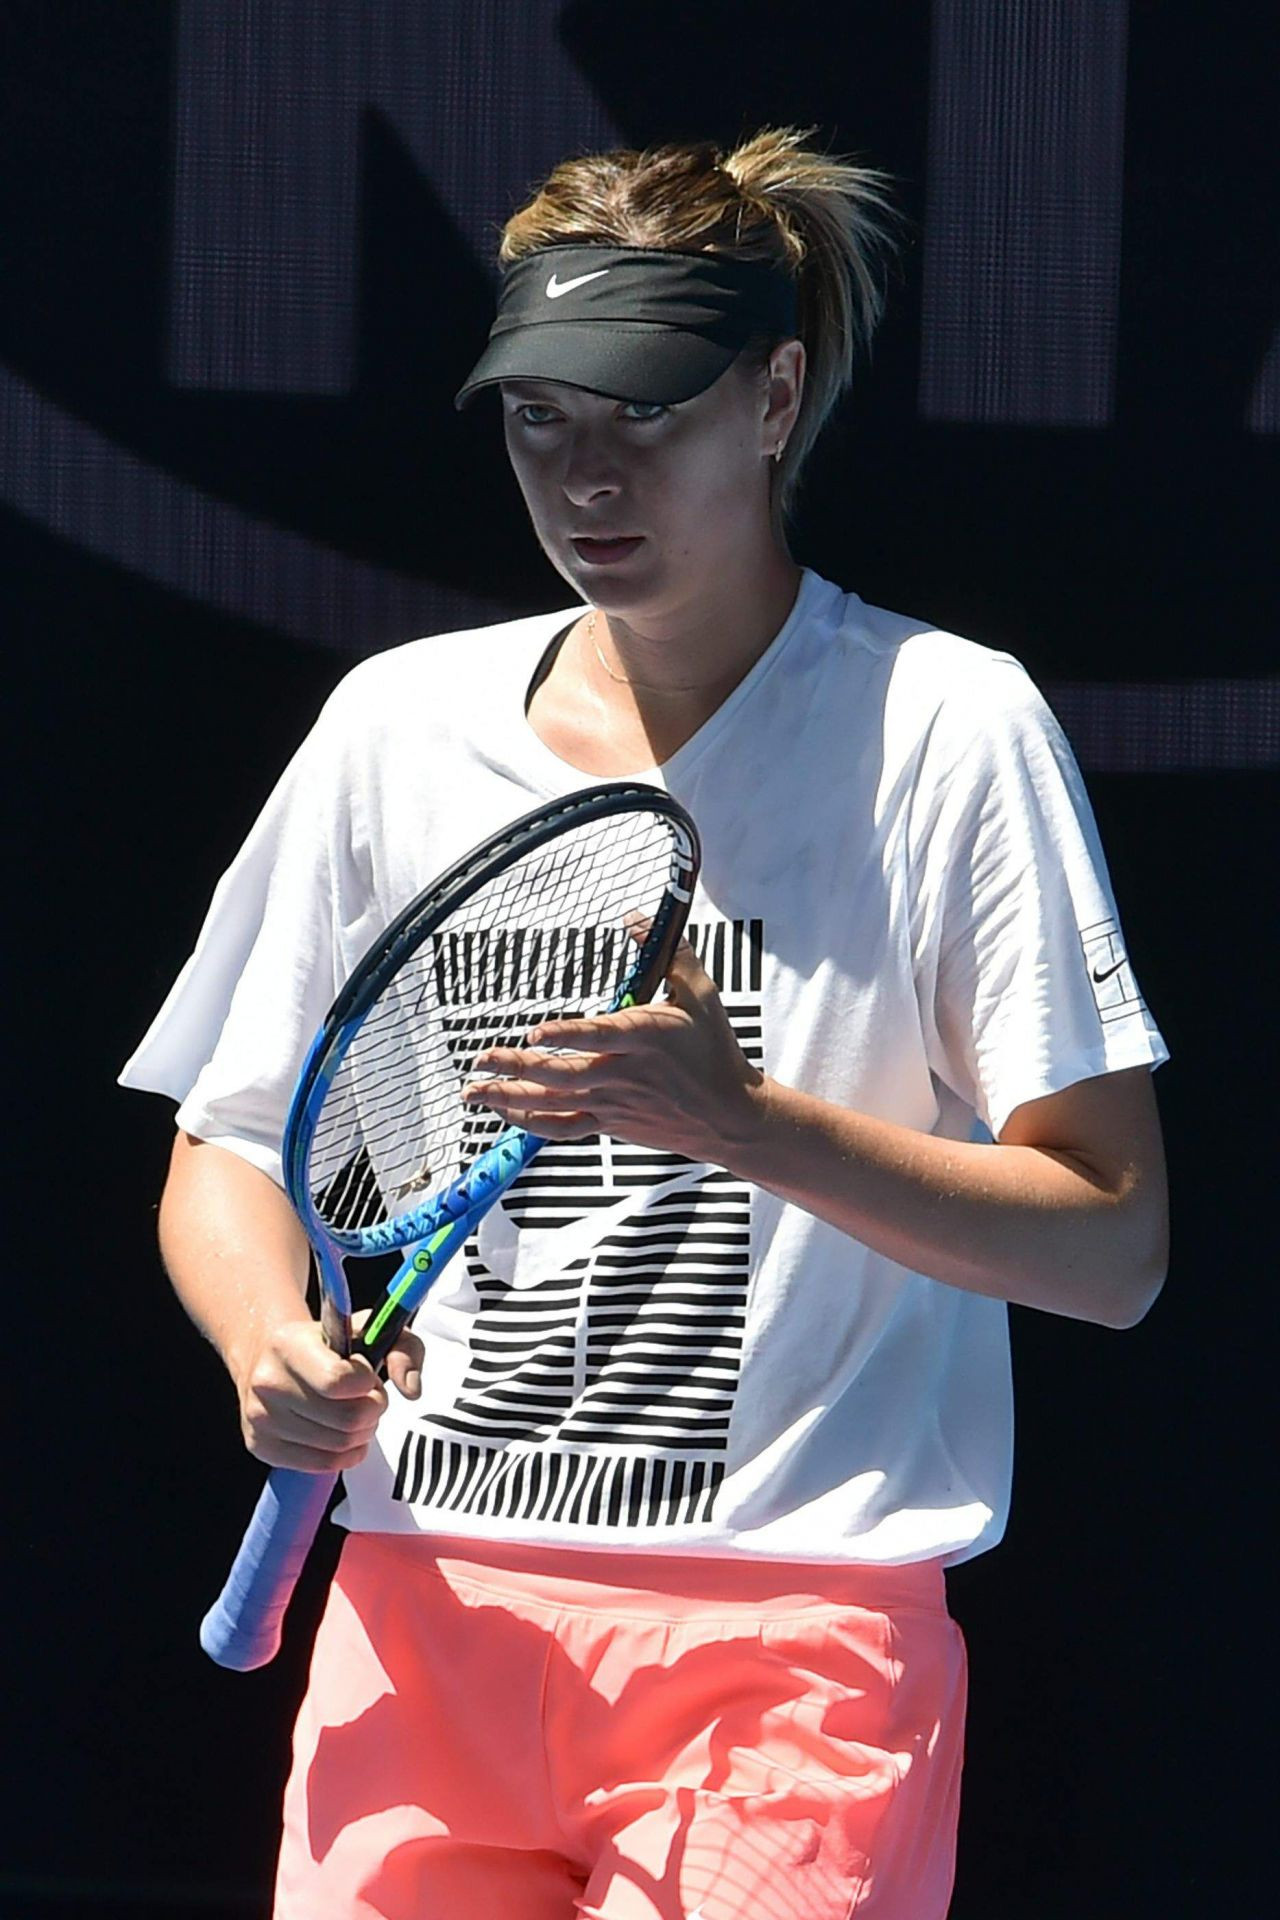 Мария Шарапова (Maria Sharapova)